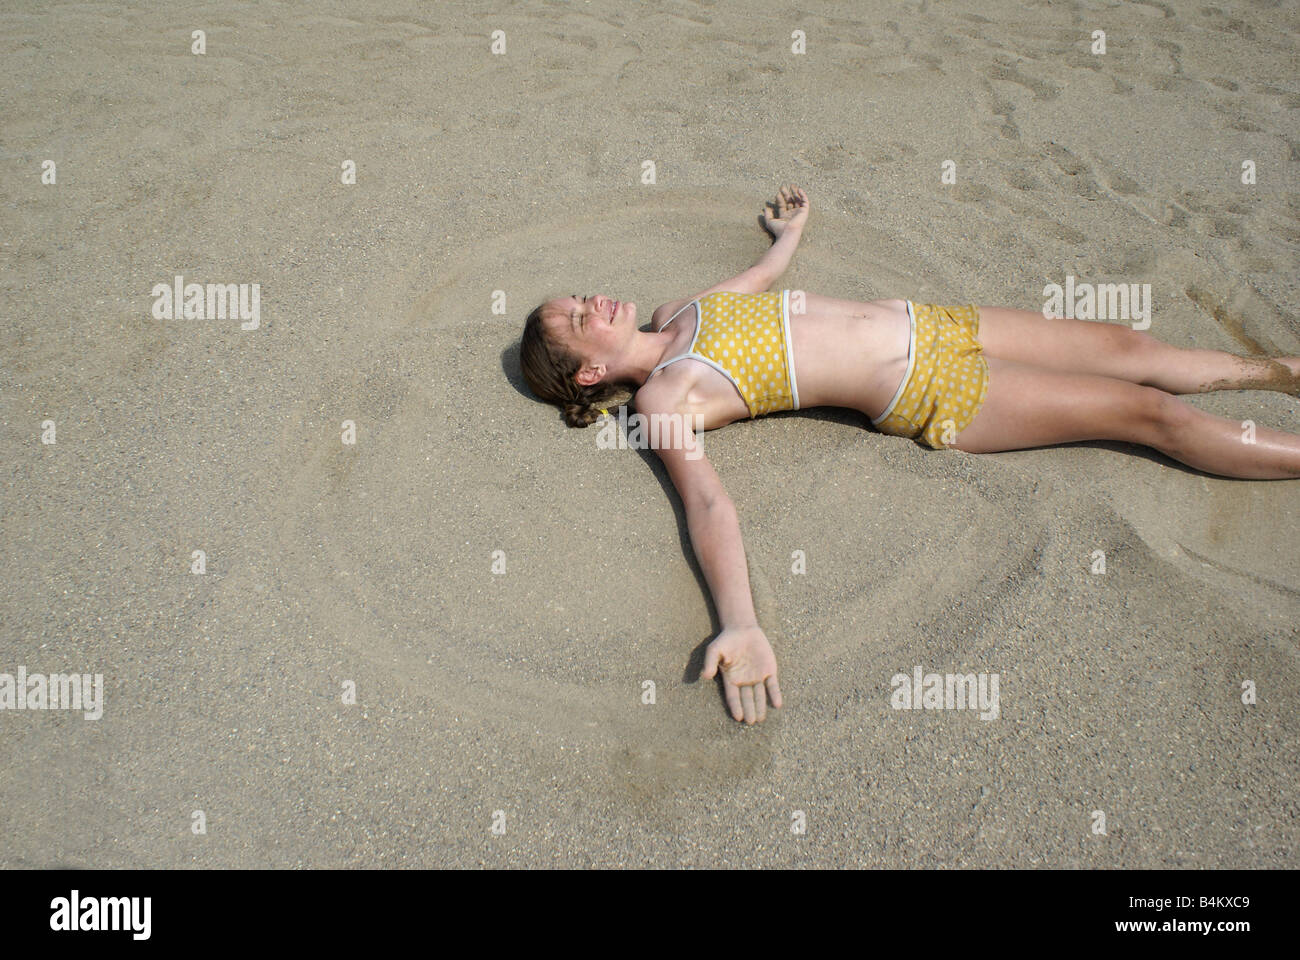 Caucasian child yellow swimsuit lay in sand moving arms eyes closed facing  upward legs spread spread Banque de photographies et d'images à haute  résolution - Alamy